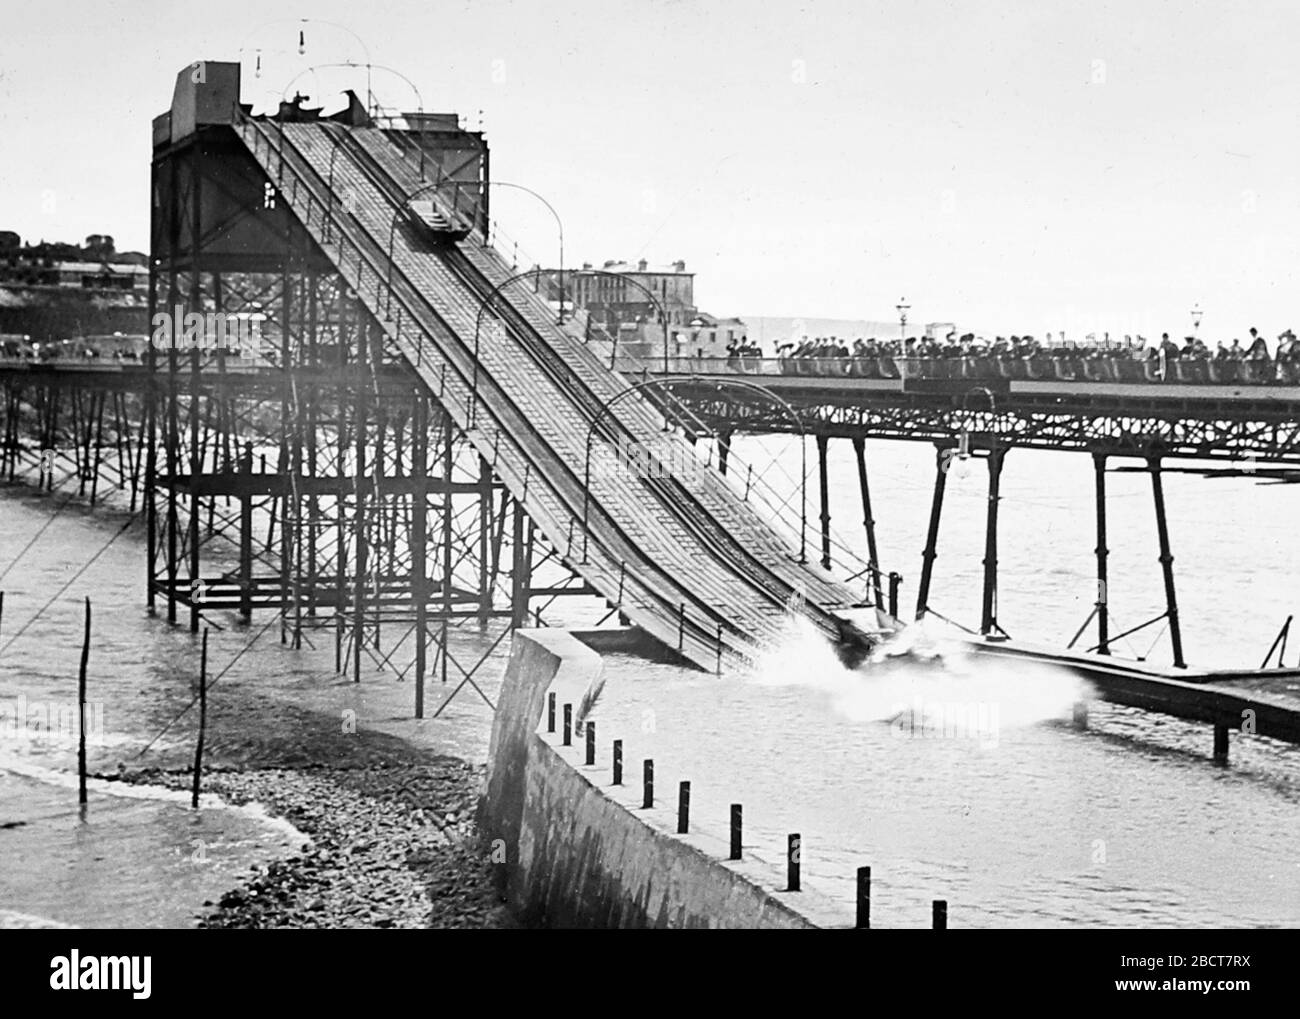 Water chute, Weston Super Mare Pier, early 1900s Stock Photo